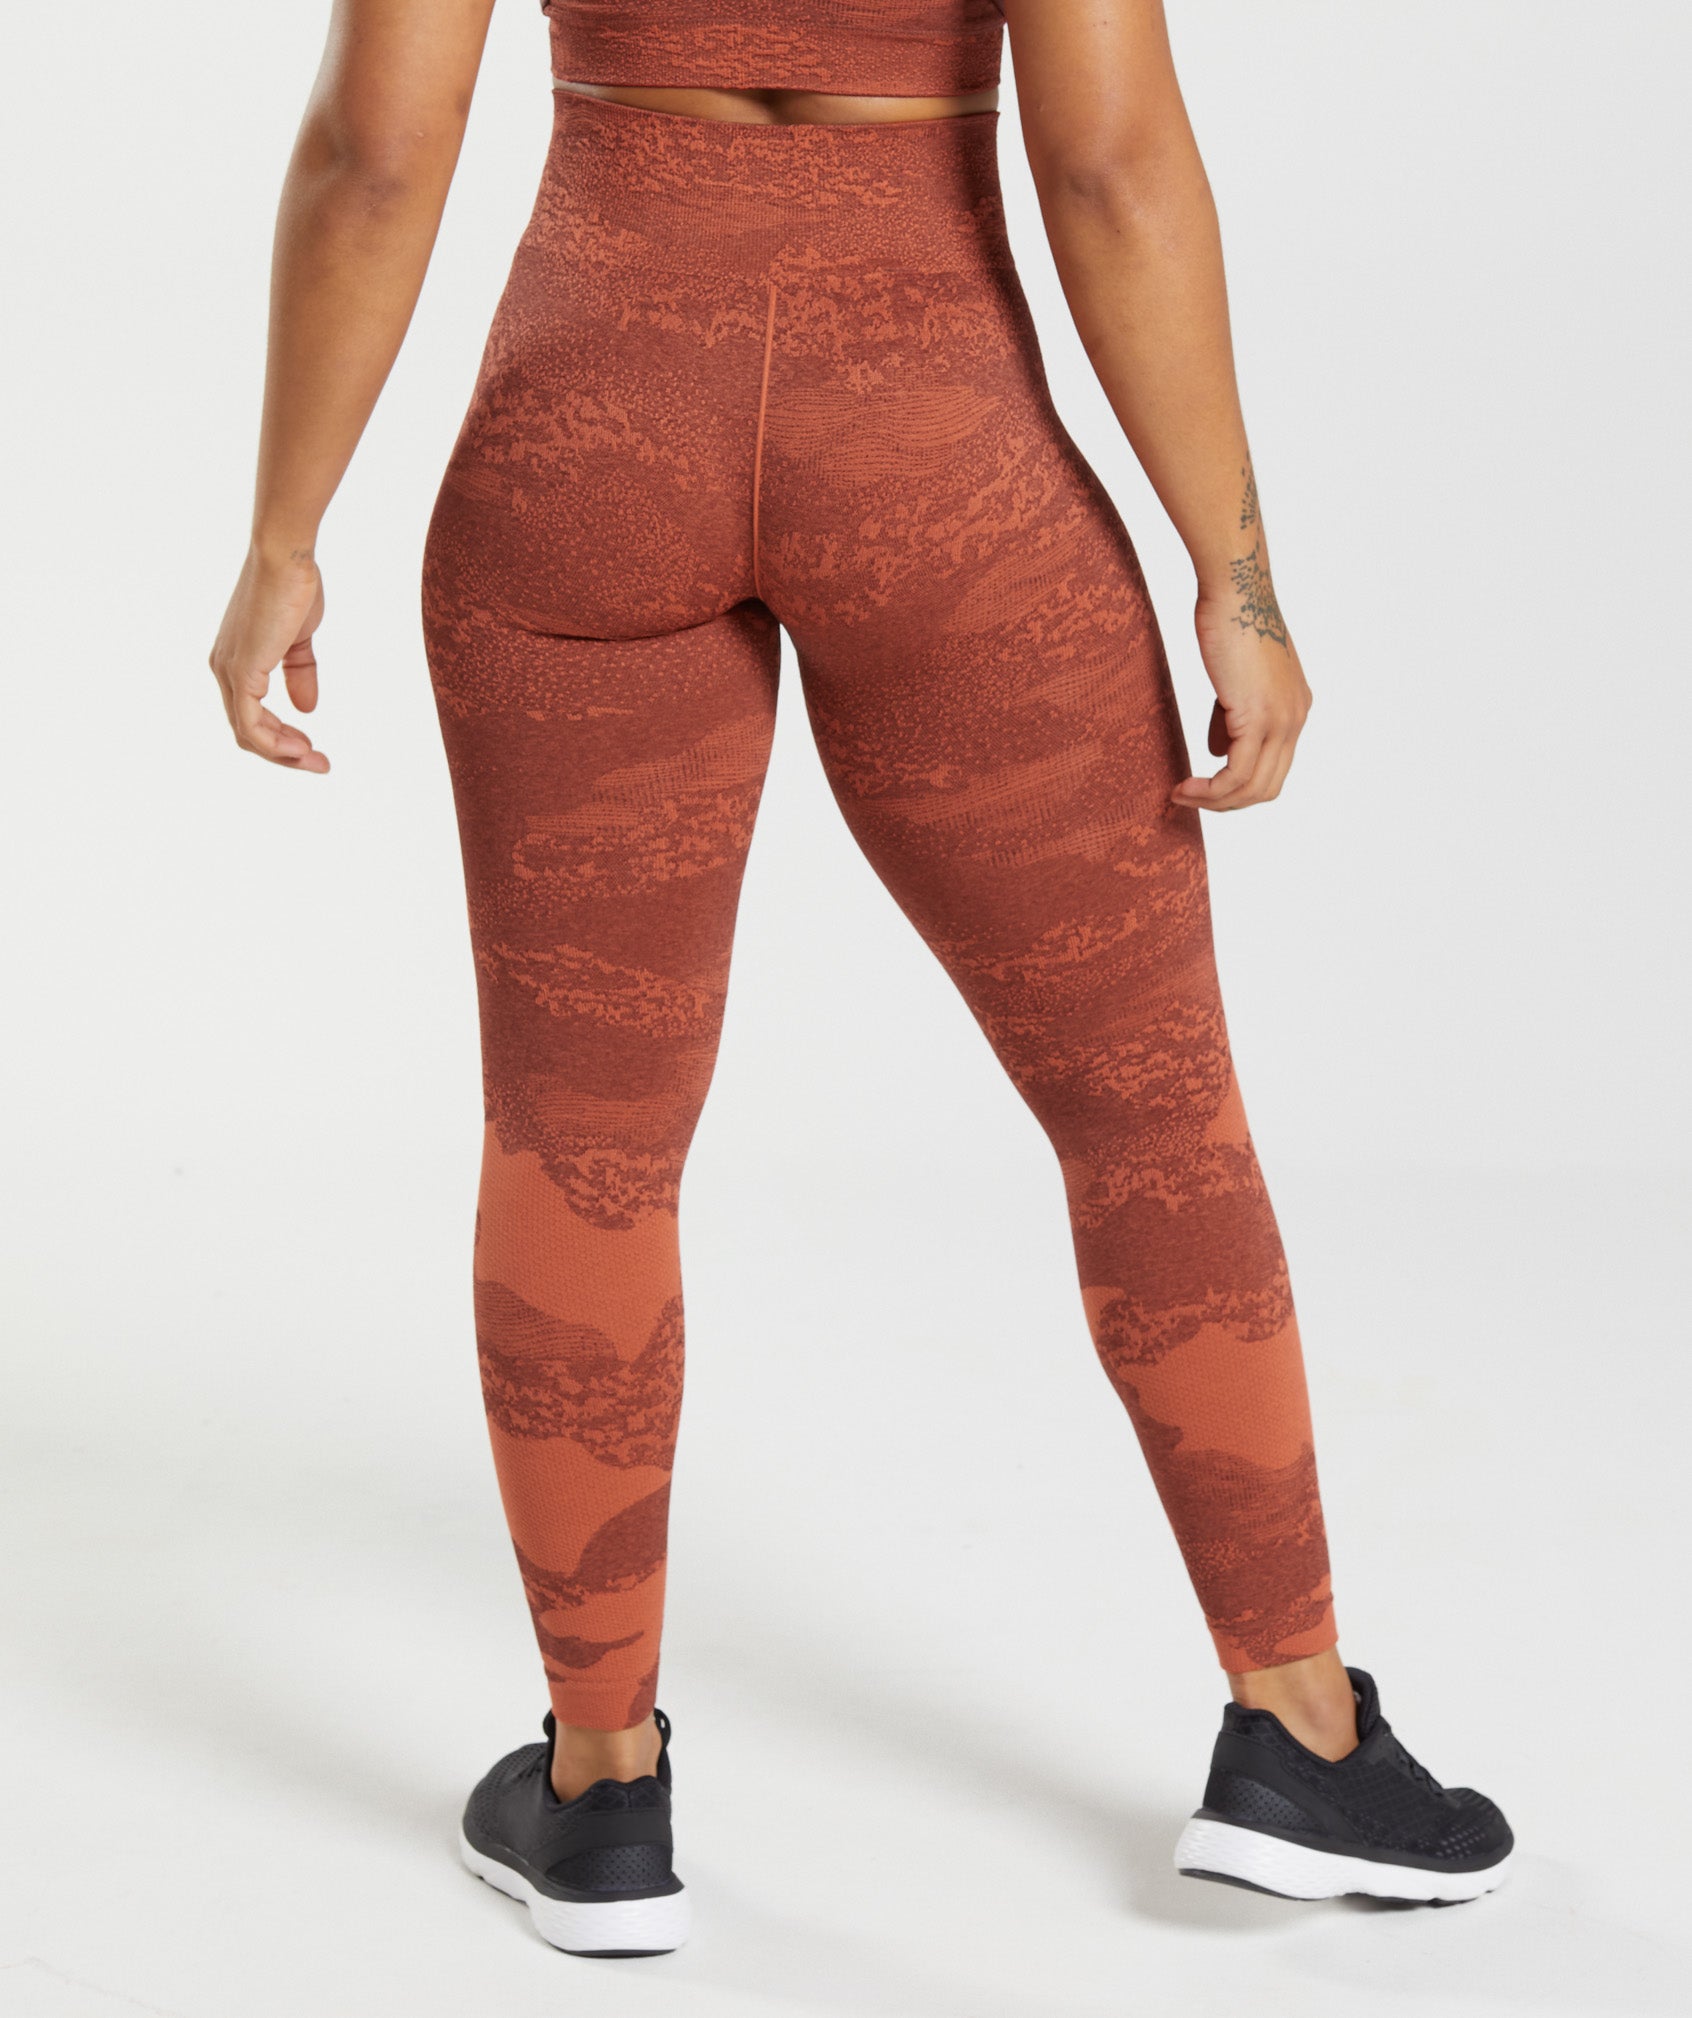 Gymshark Savanna Cherry Brown Adapt Camo Leggings - Size Medium Red - $20  (66% Off Retail) - From Kimberley